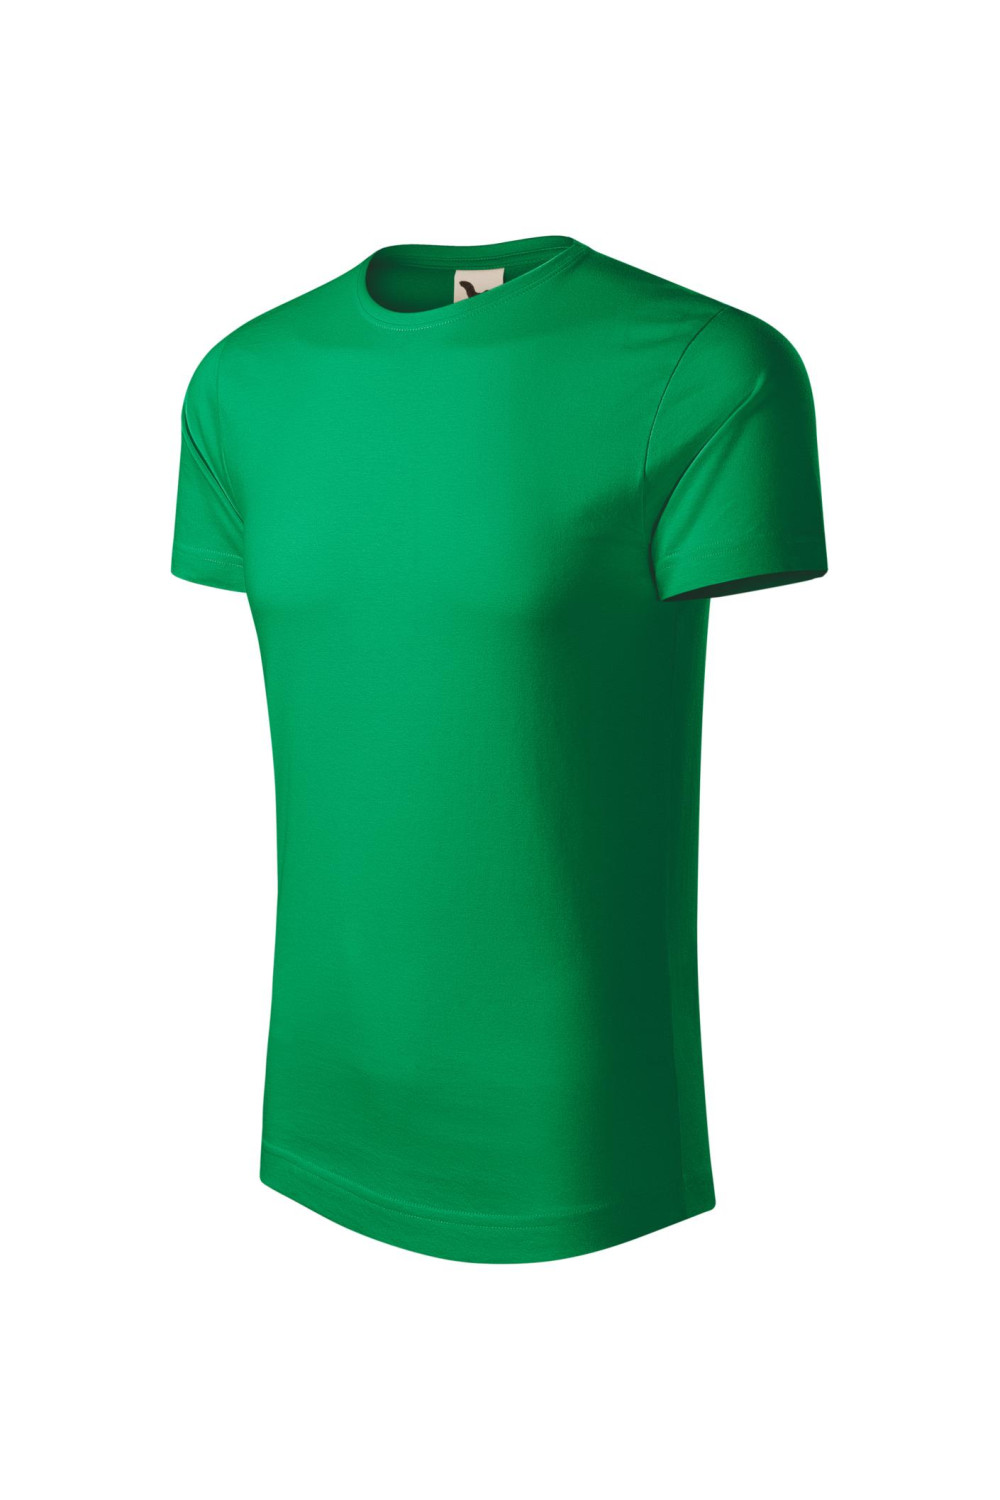 ORIGIN (GOTS) 171 MALFINI ADLER Koszulka męska t-shirt zieleń trawy